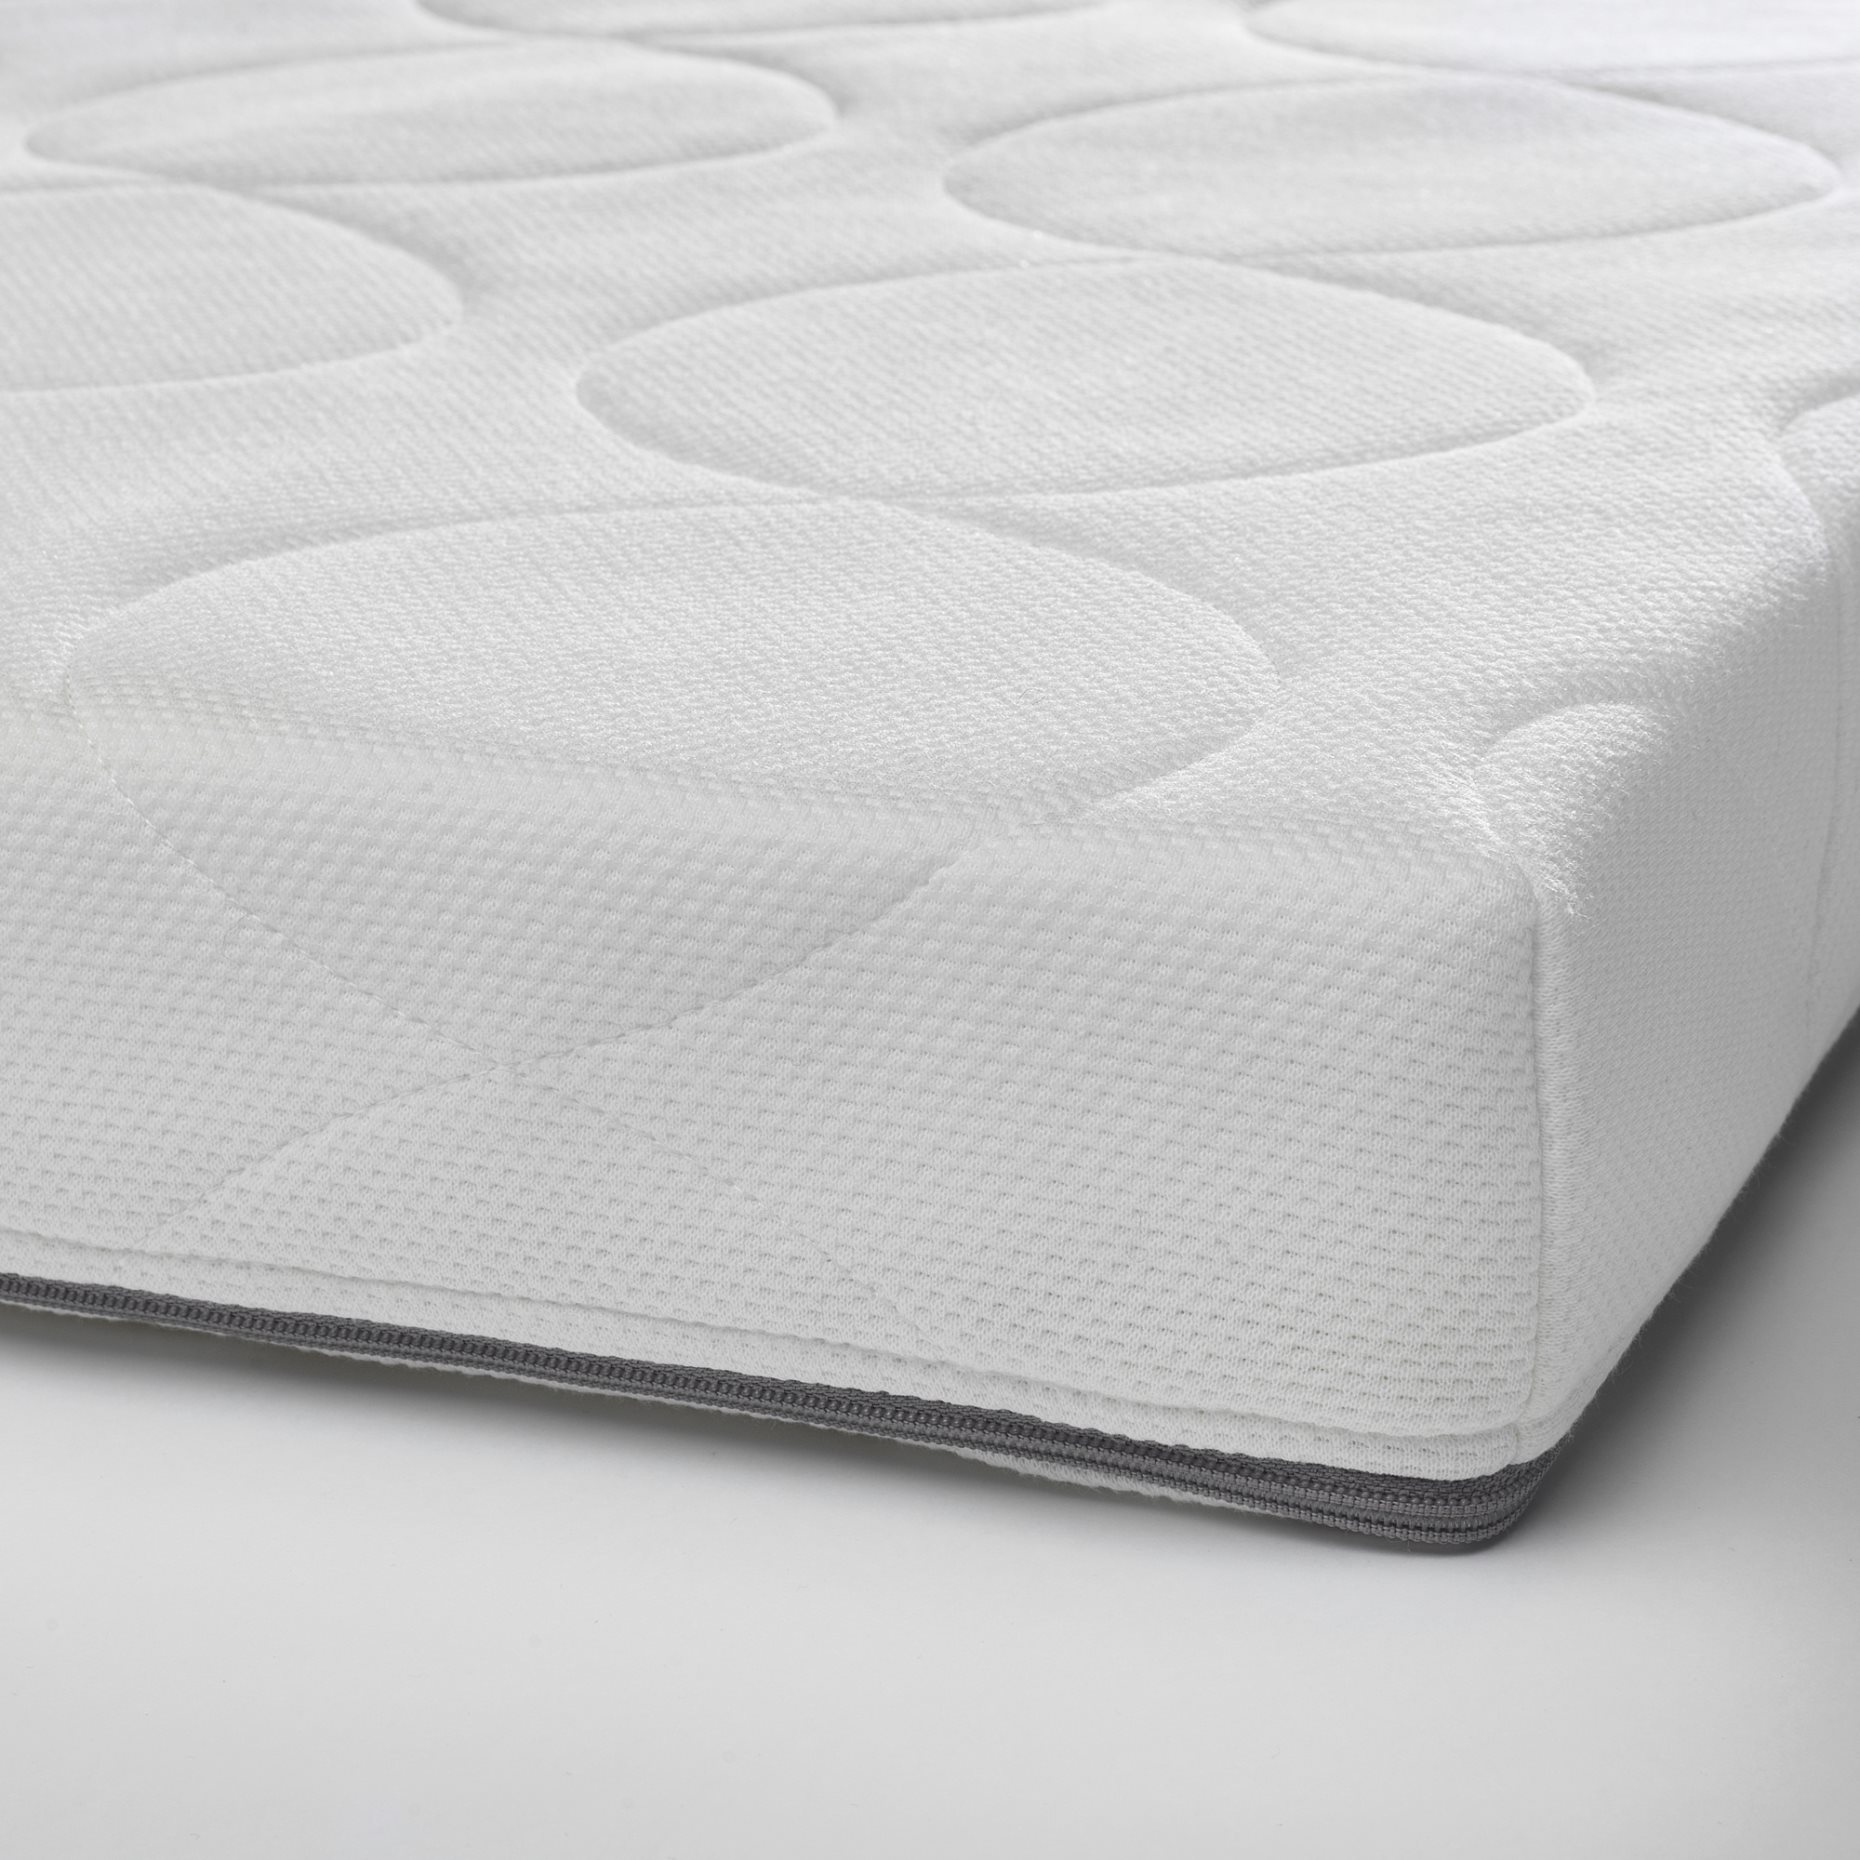 SKÖNAST, foam mattress for cot, 203.554.53